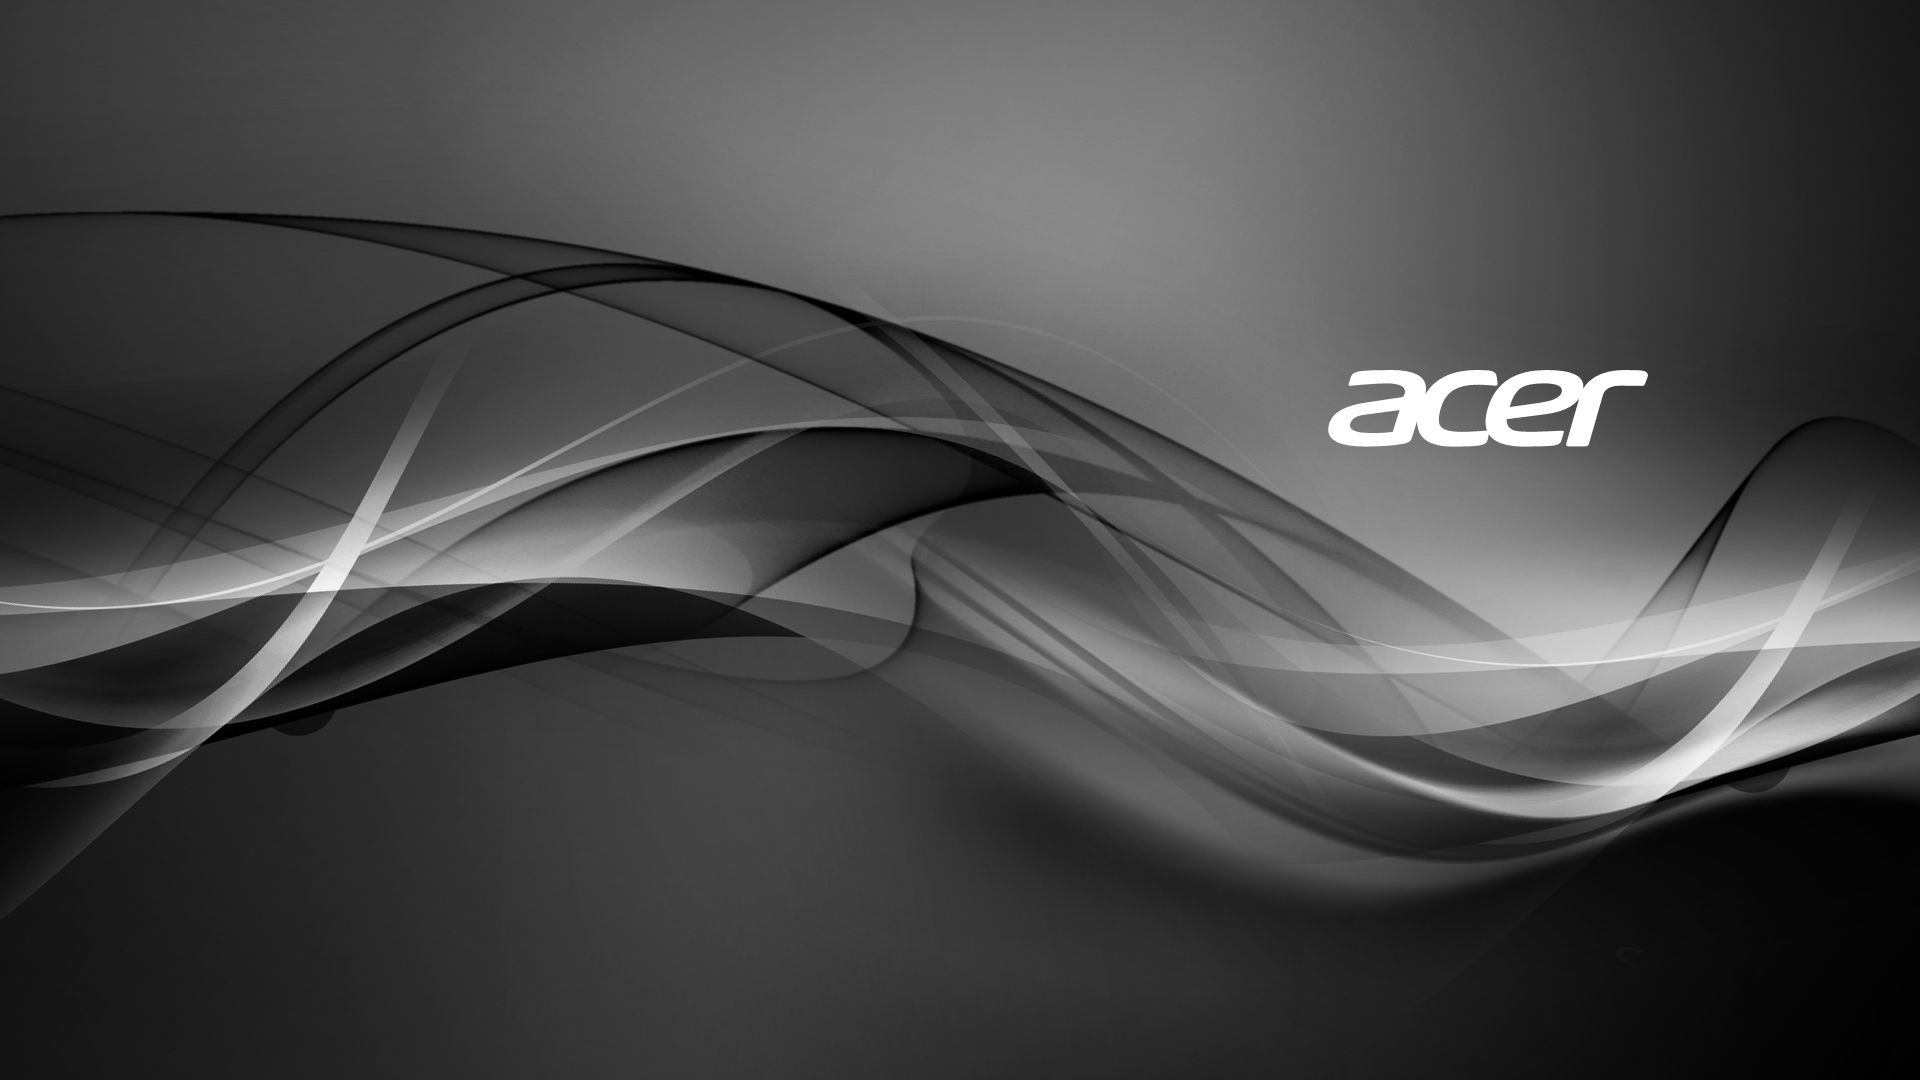 1920x1080 Acer HD Wallpapers Free Wallpaper Downloads Acer HD Desktop